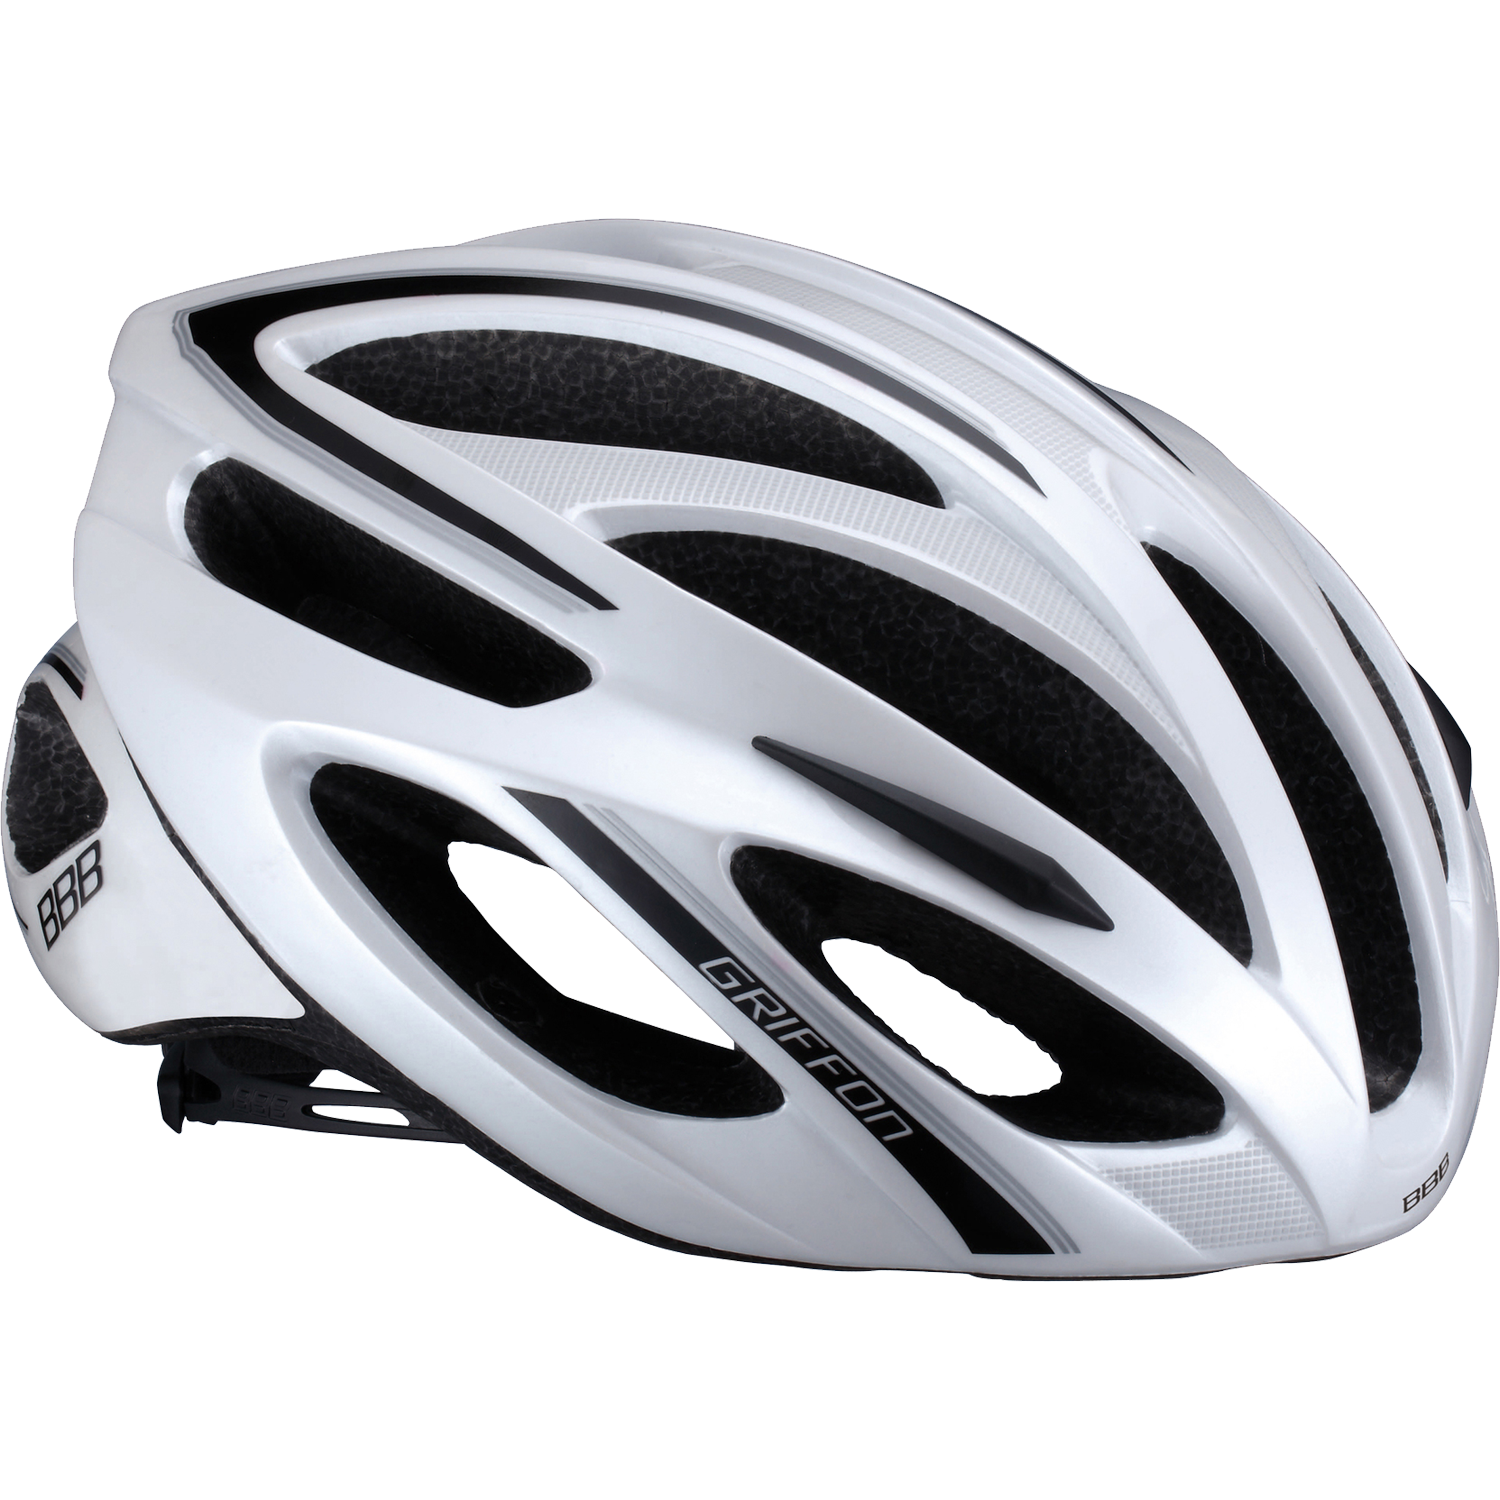 Cycling Helmet  Transparent Photo